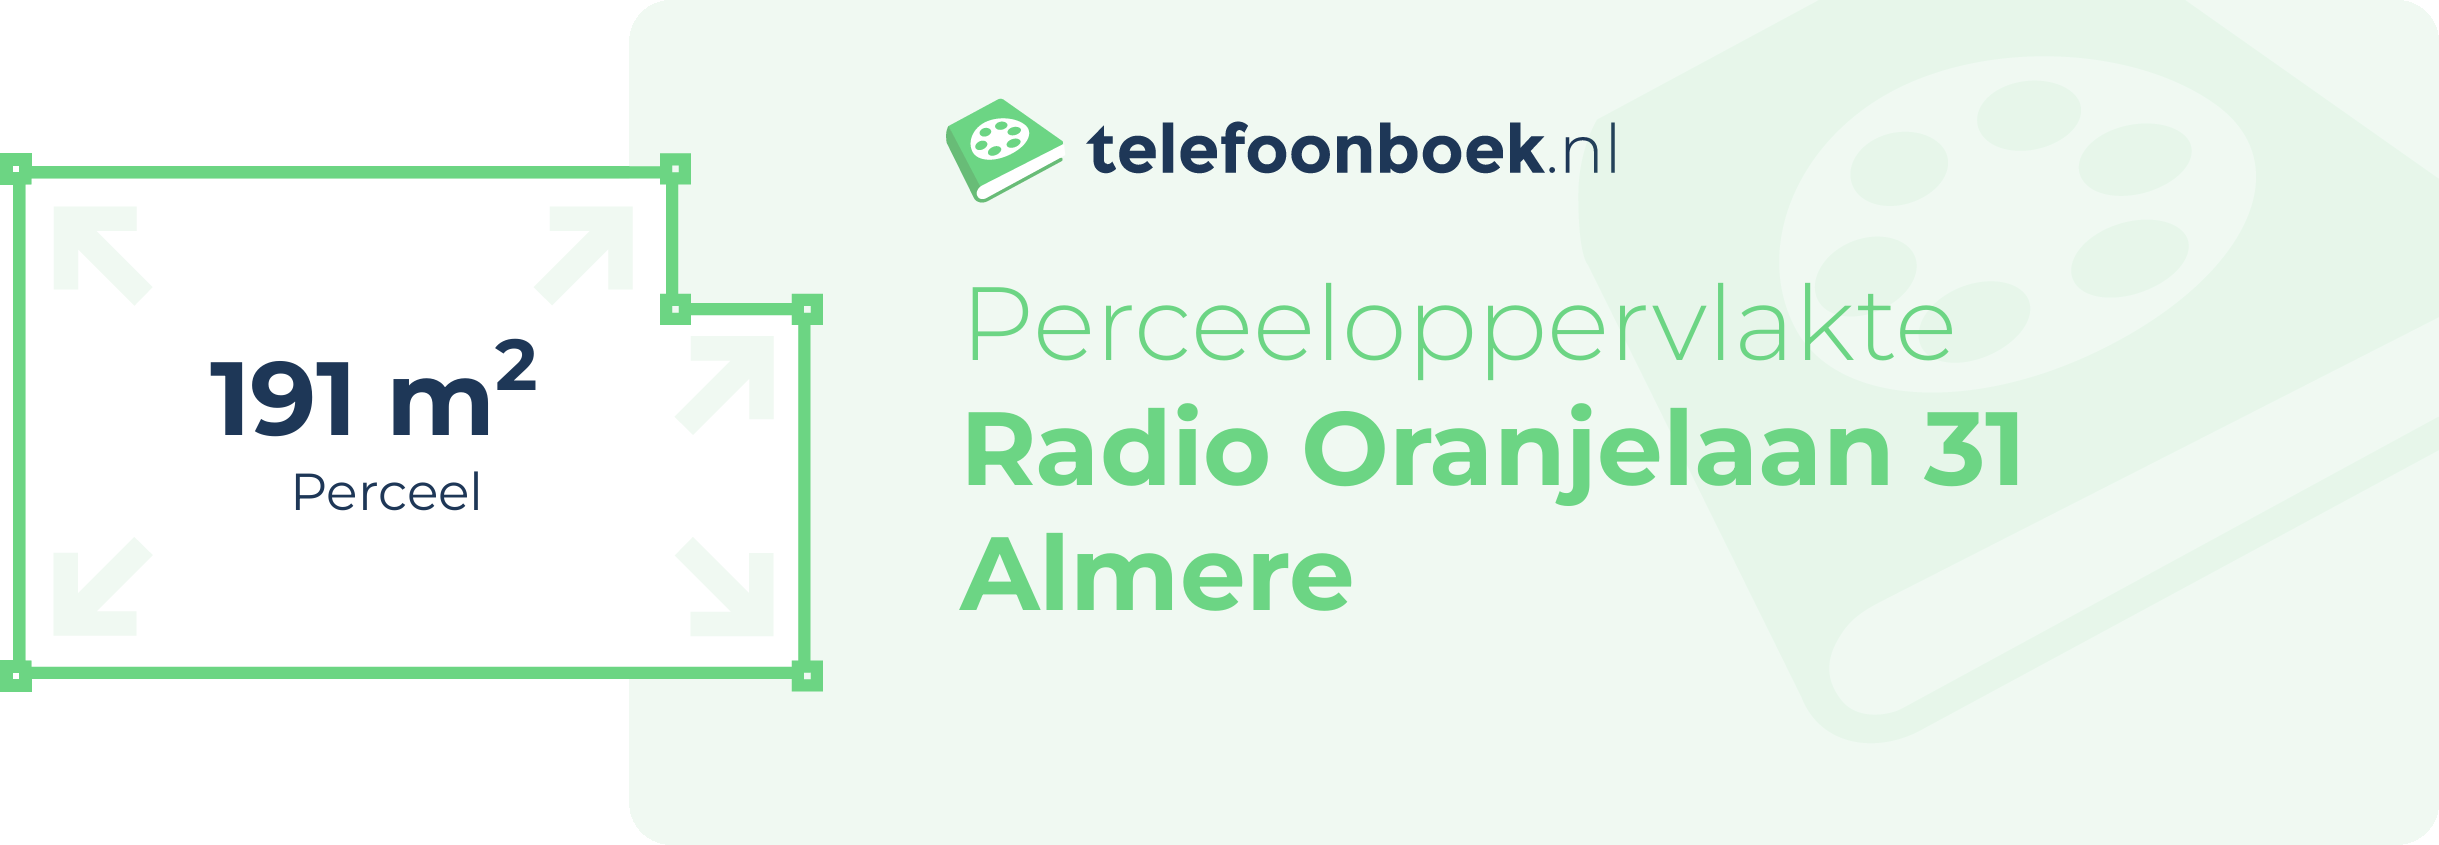 Perceeloppervlakte Radio Oranjelaan 31 Almere